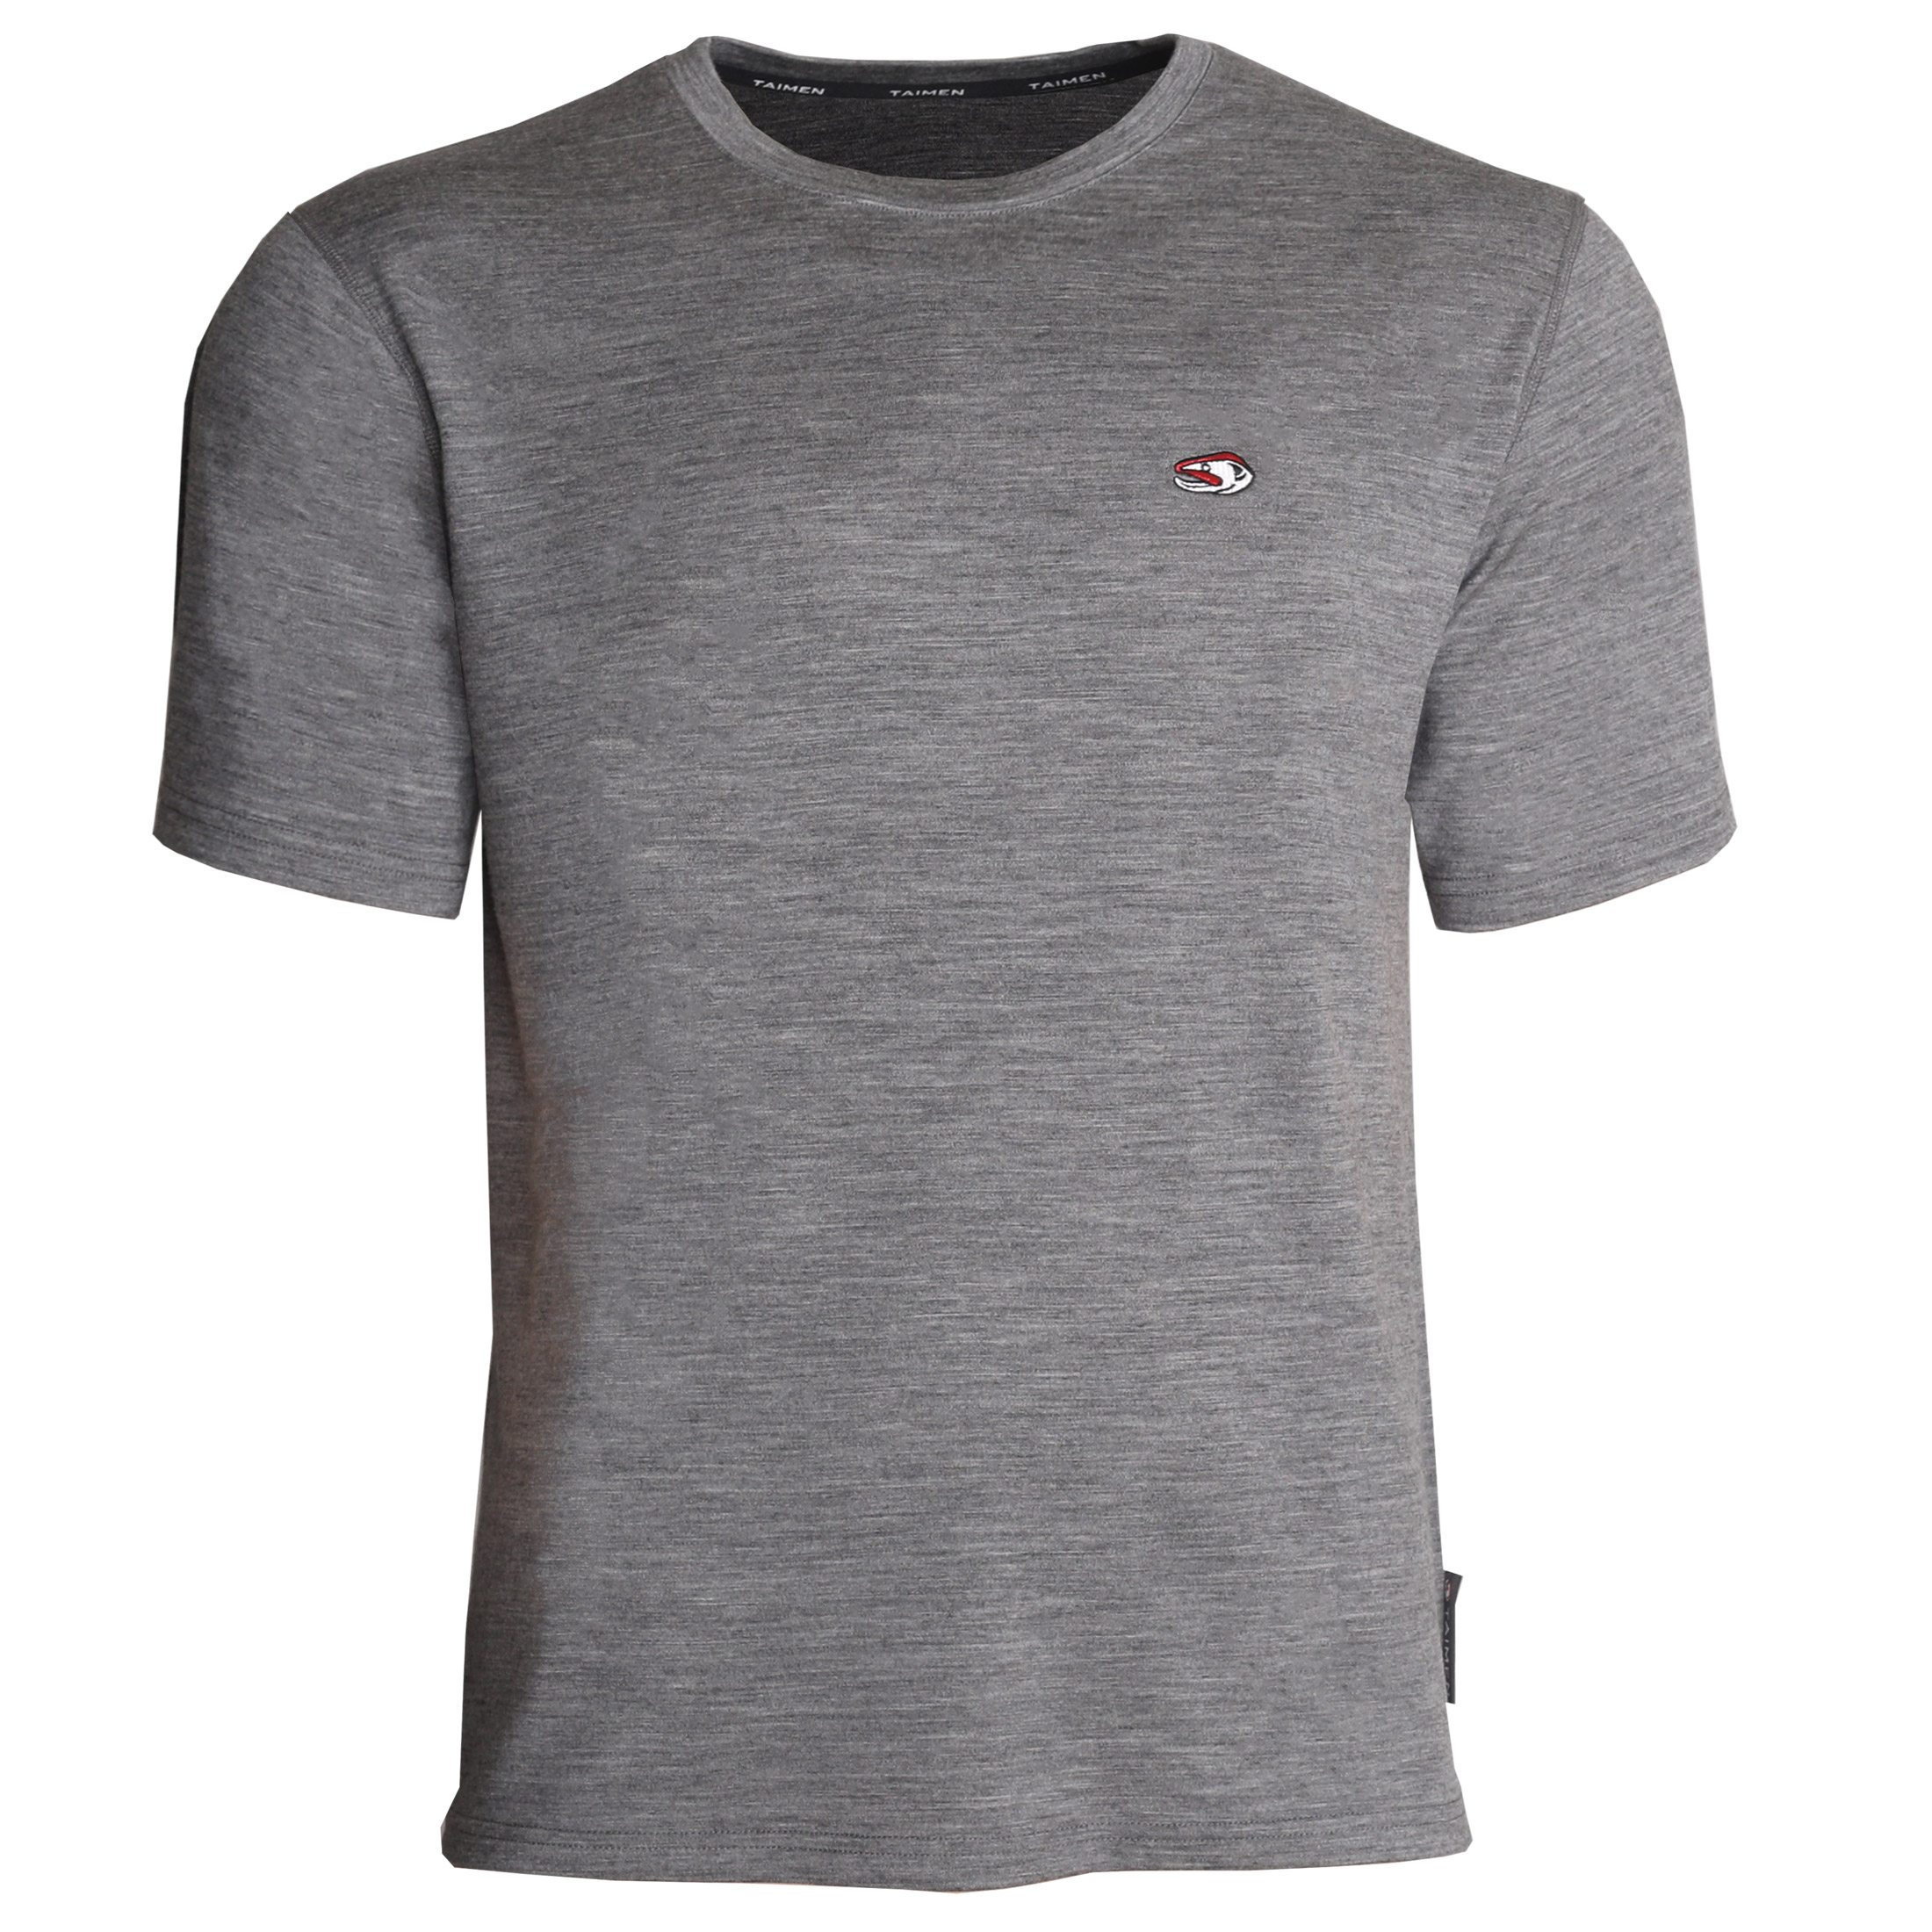 Taimen Ider Merino T-Shirt - Grey